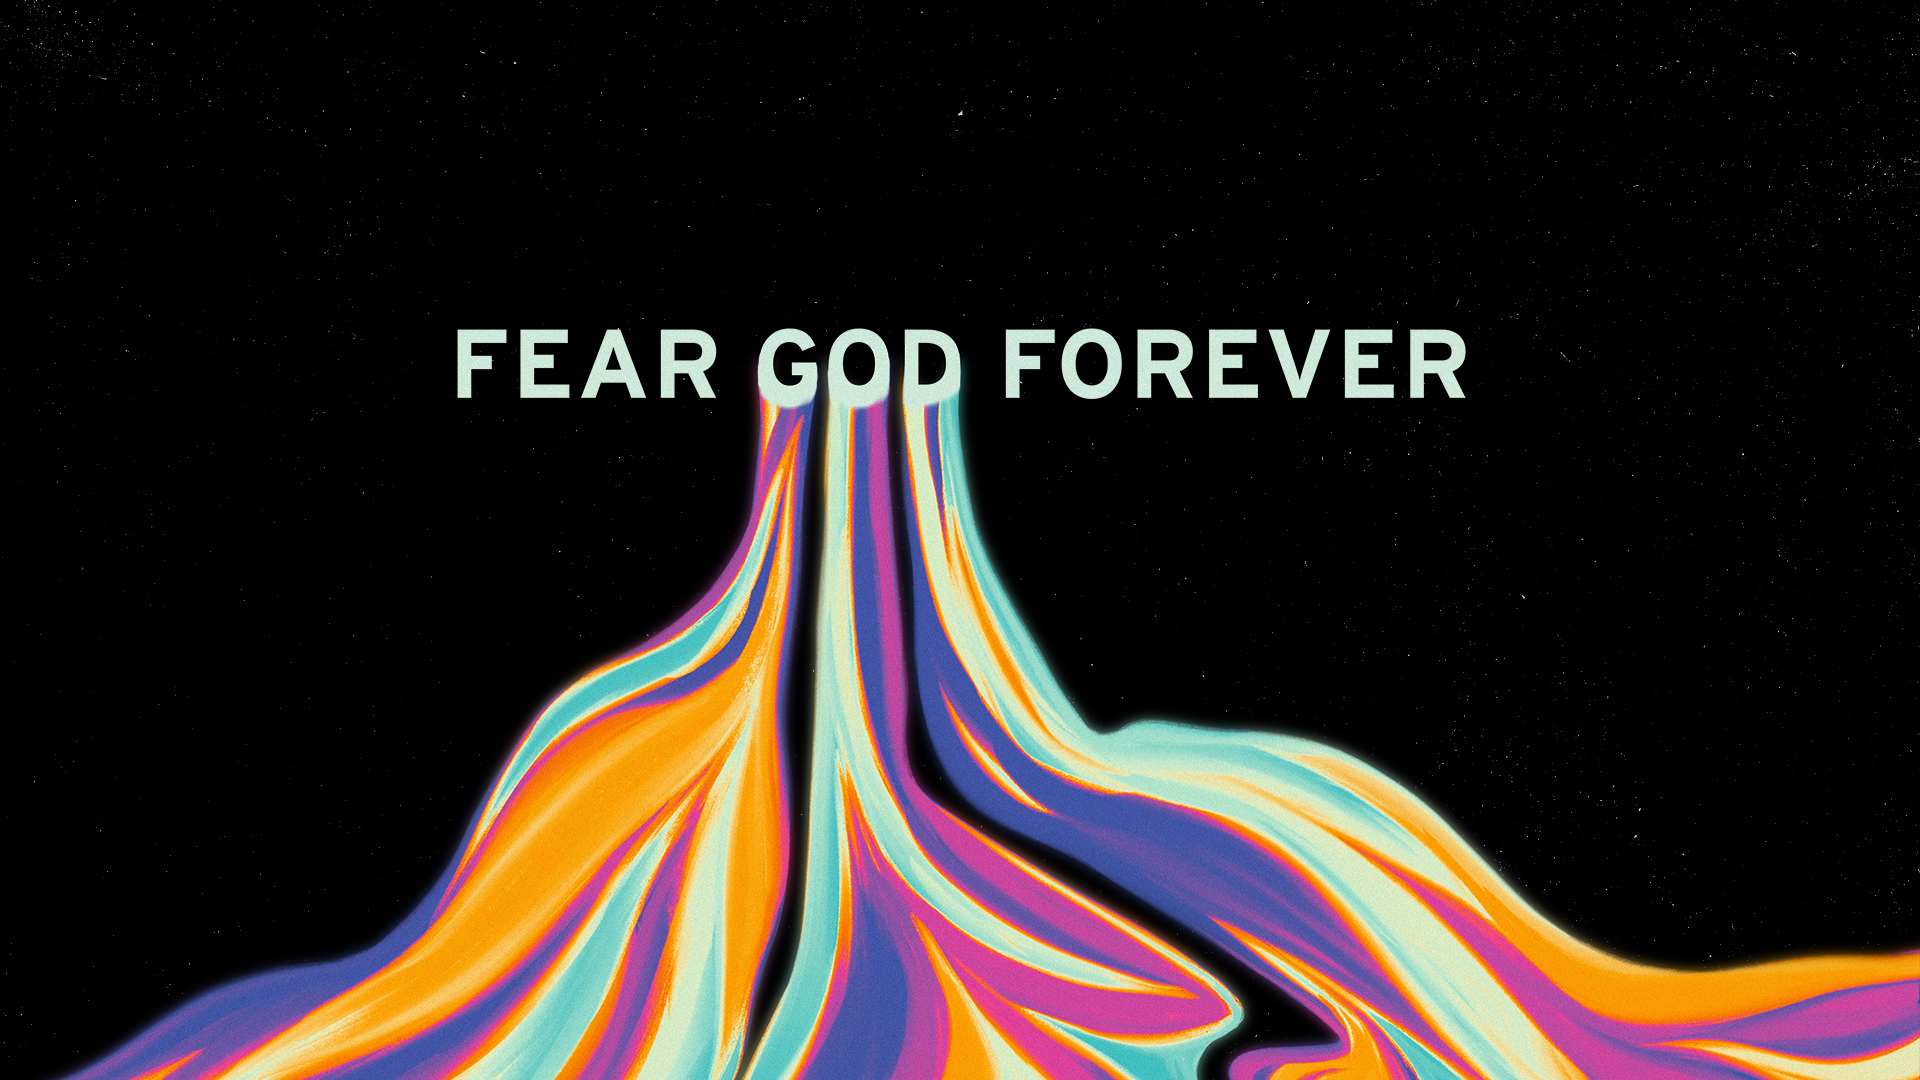 FearGodForever2 - Wide.png